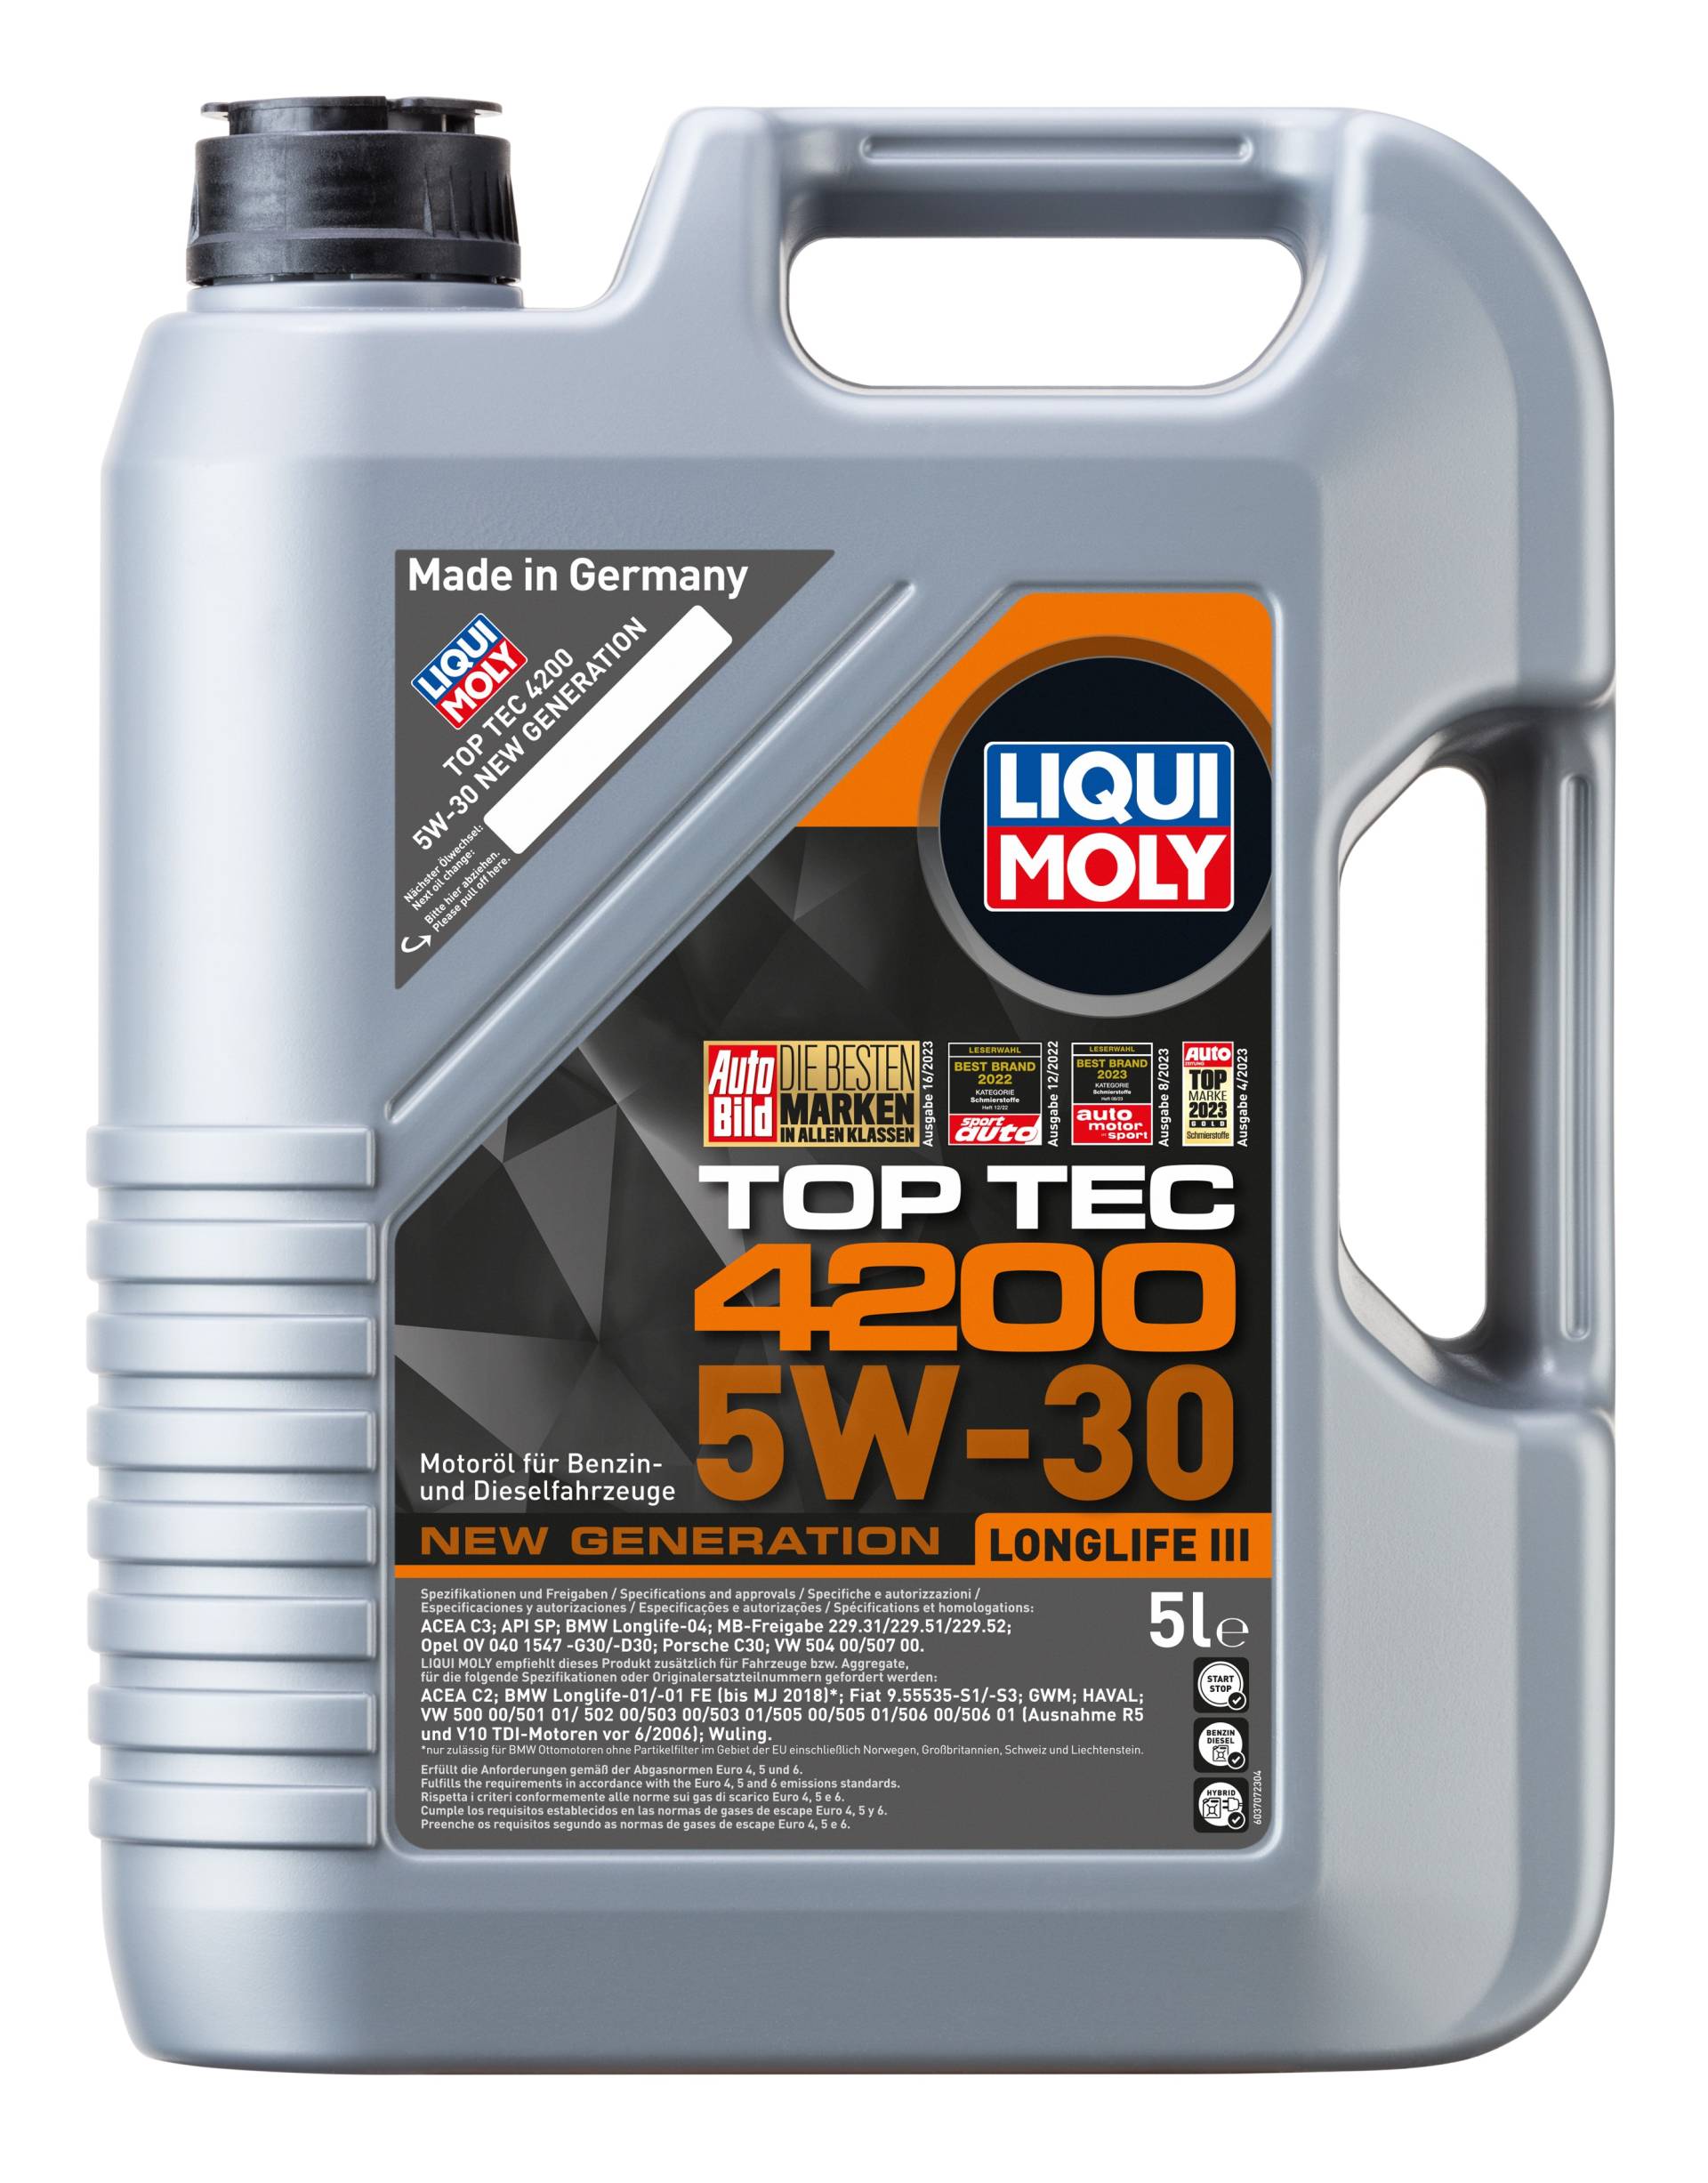 Liqui Moly TopTec 4200 5W-30 Motoröl, 5 Liter von Liqui Moly